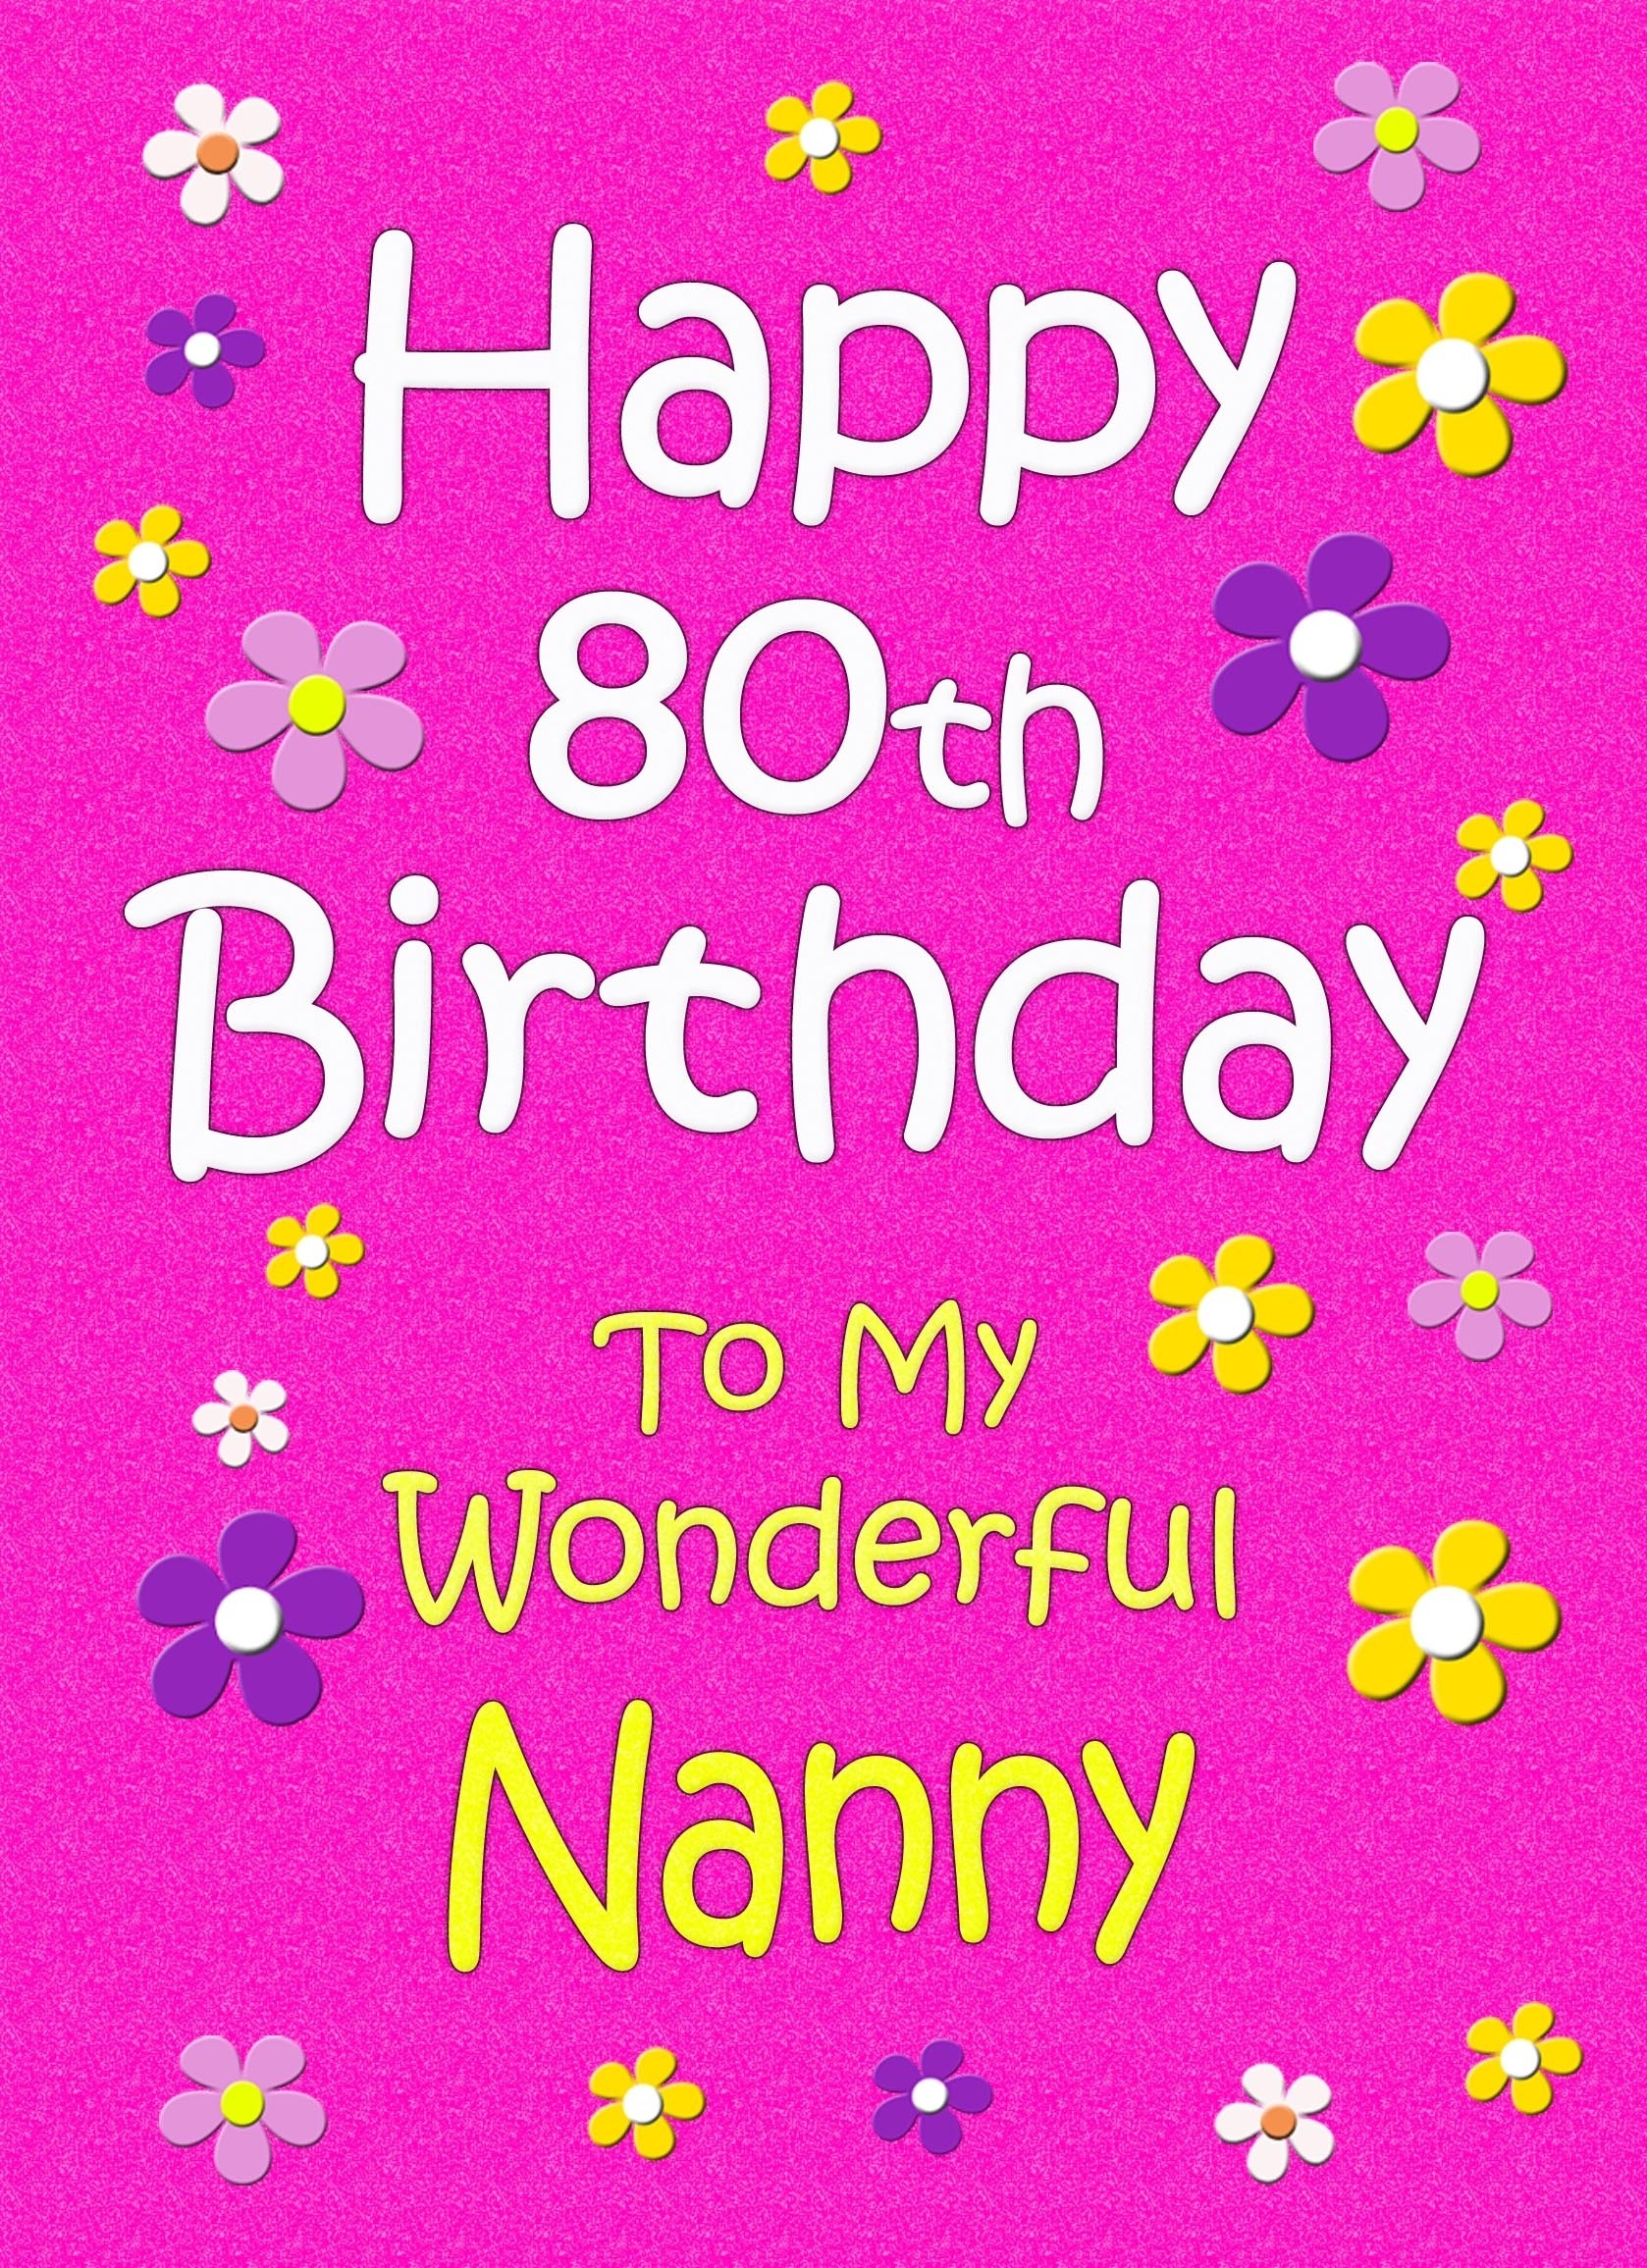 Nanny 80th Birthday Card (Pink)